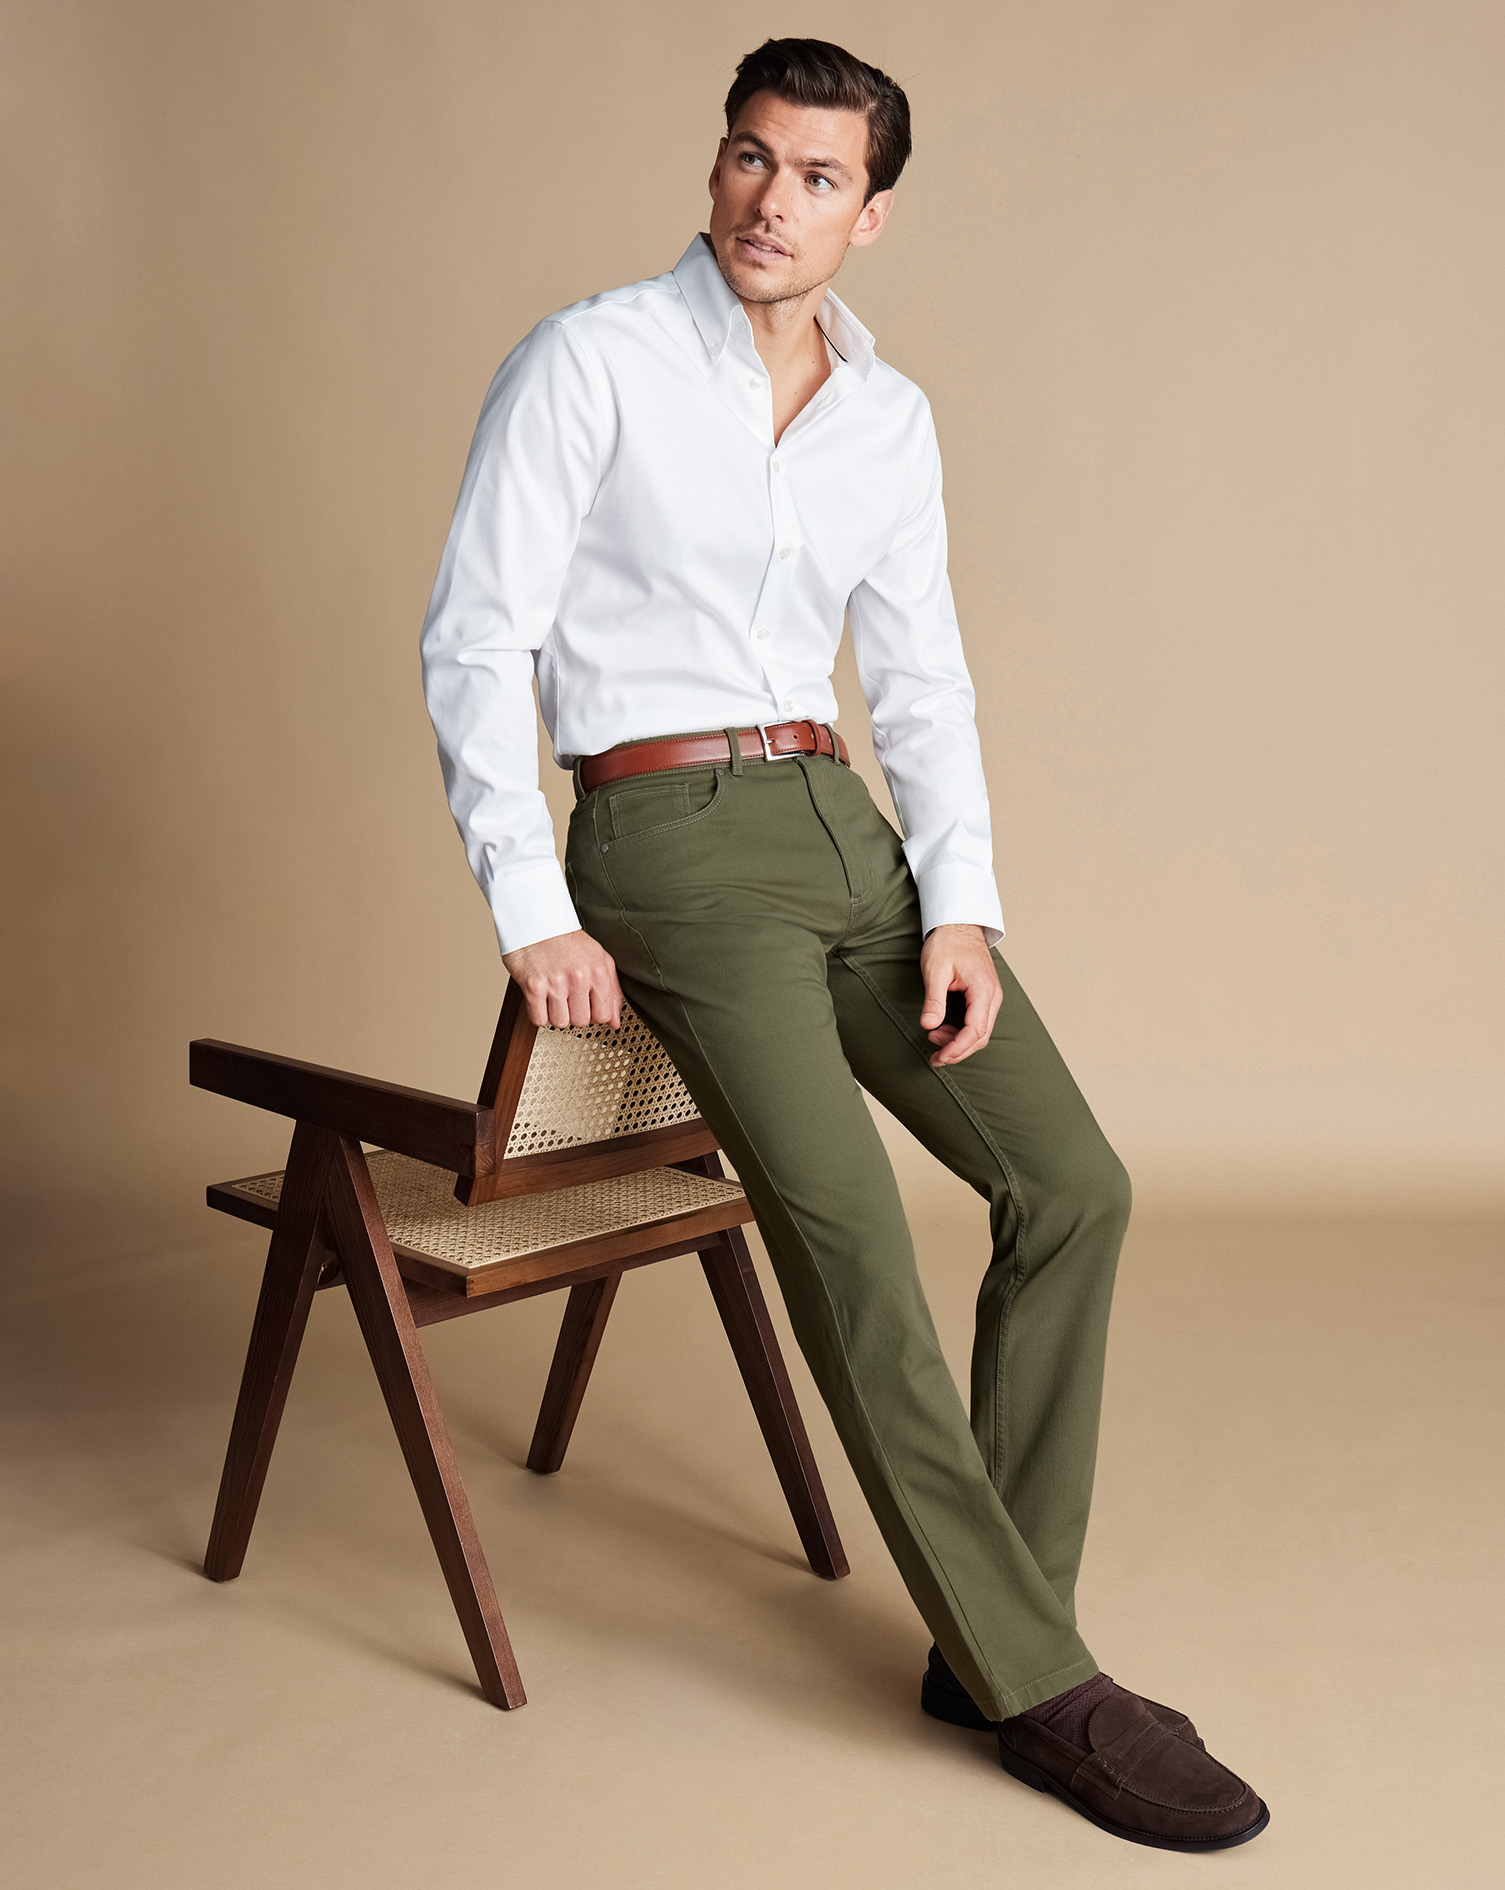 Men's Charles Tyrwhitt Twill 5 Pocket Jeans - Olive Green Size W34 L34 Cotton
